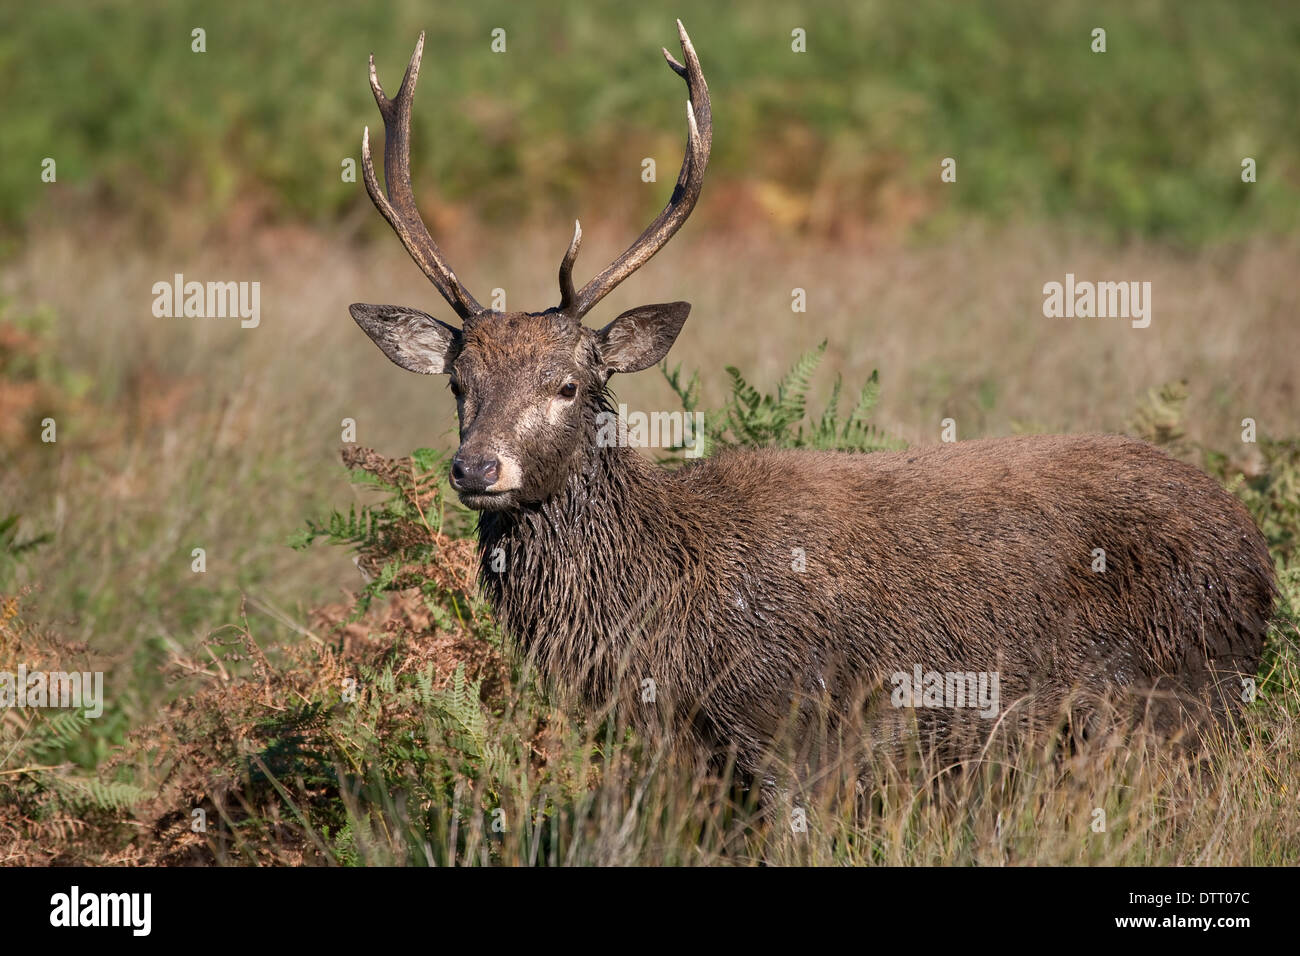 Young red deer pricket emerging from bracken. Stock Photo